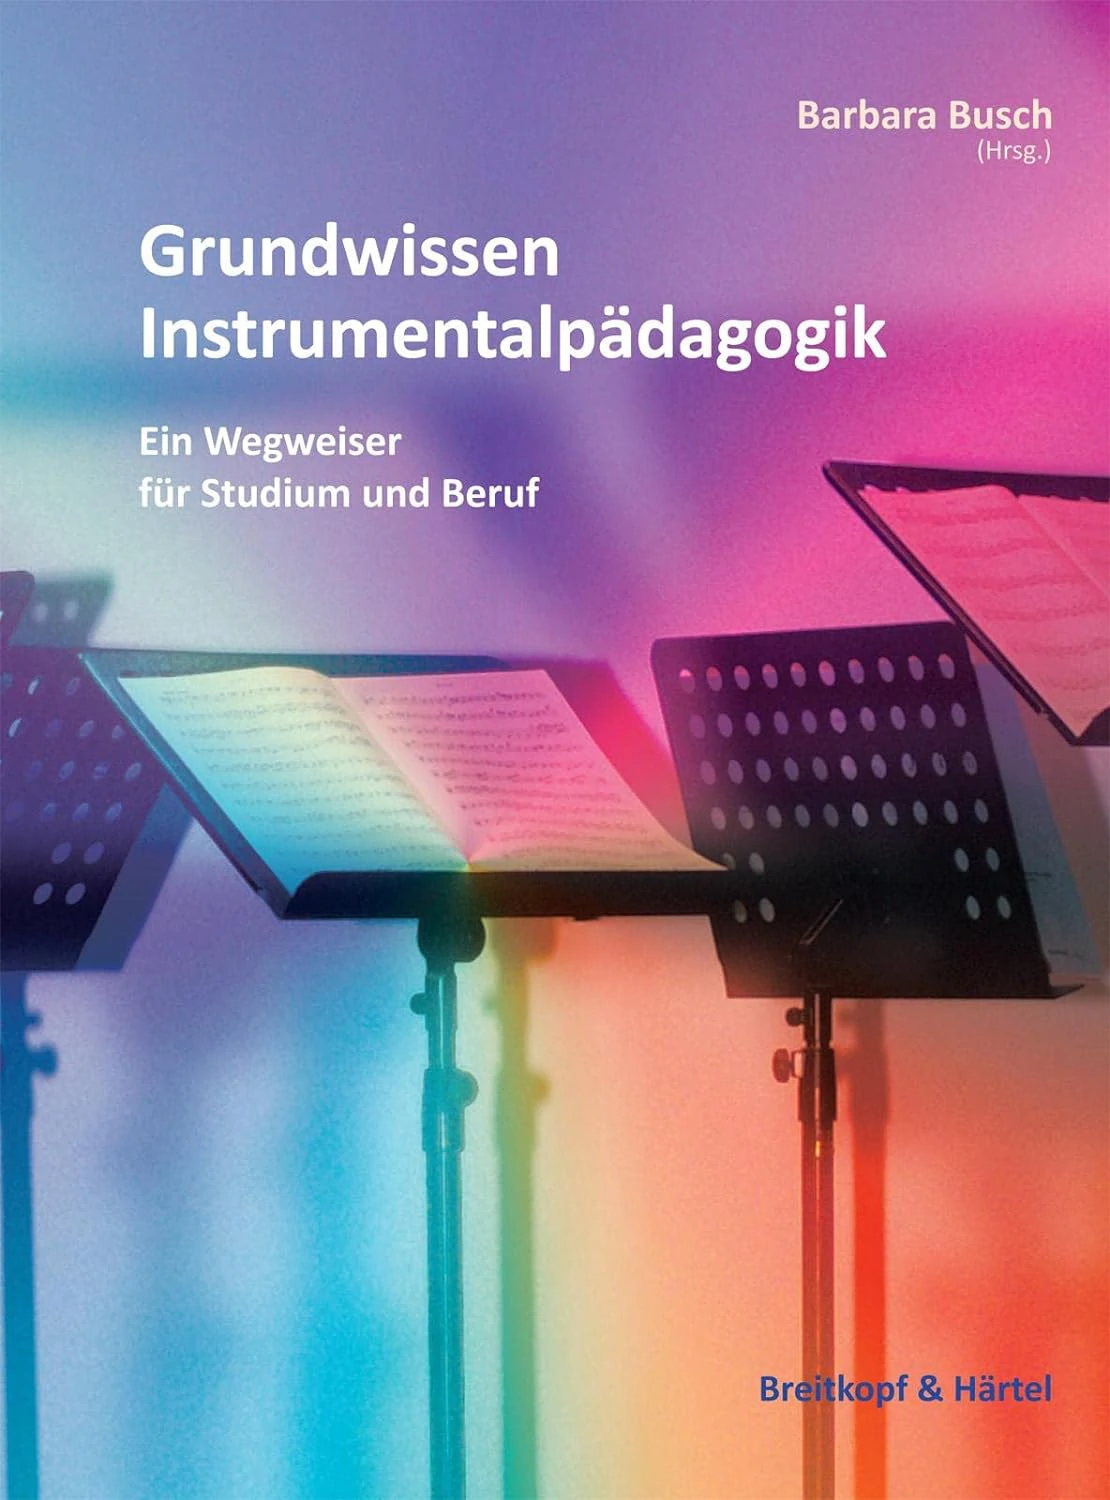 Buch-Cover Grundwissen Instrumentalpädagogik